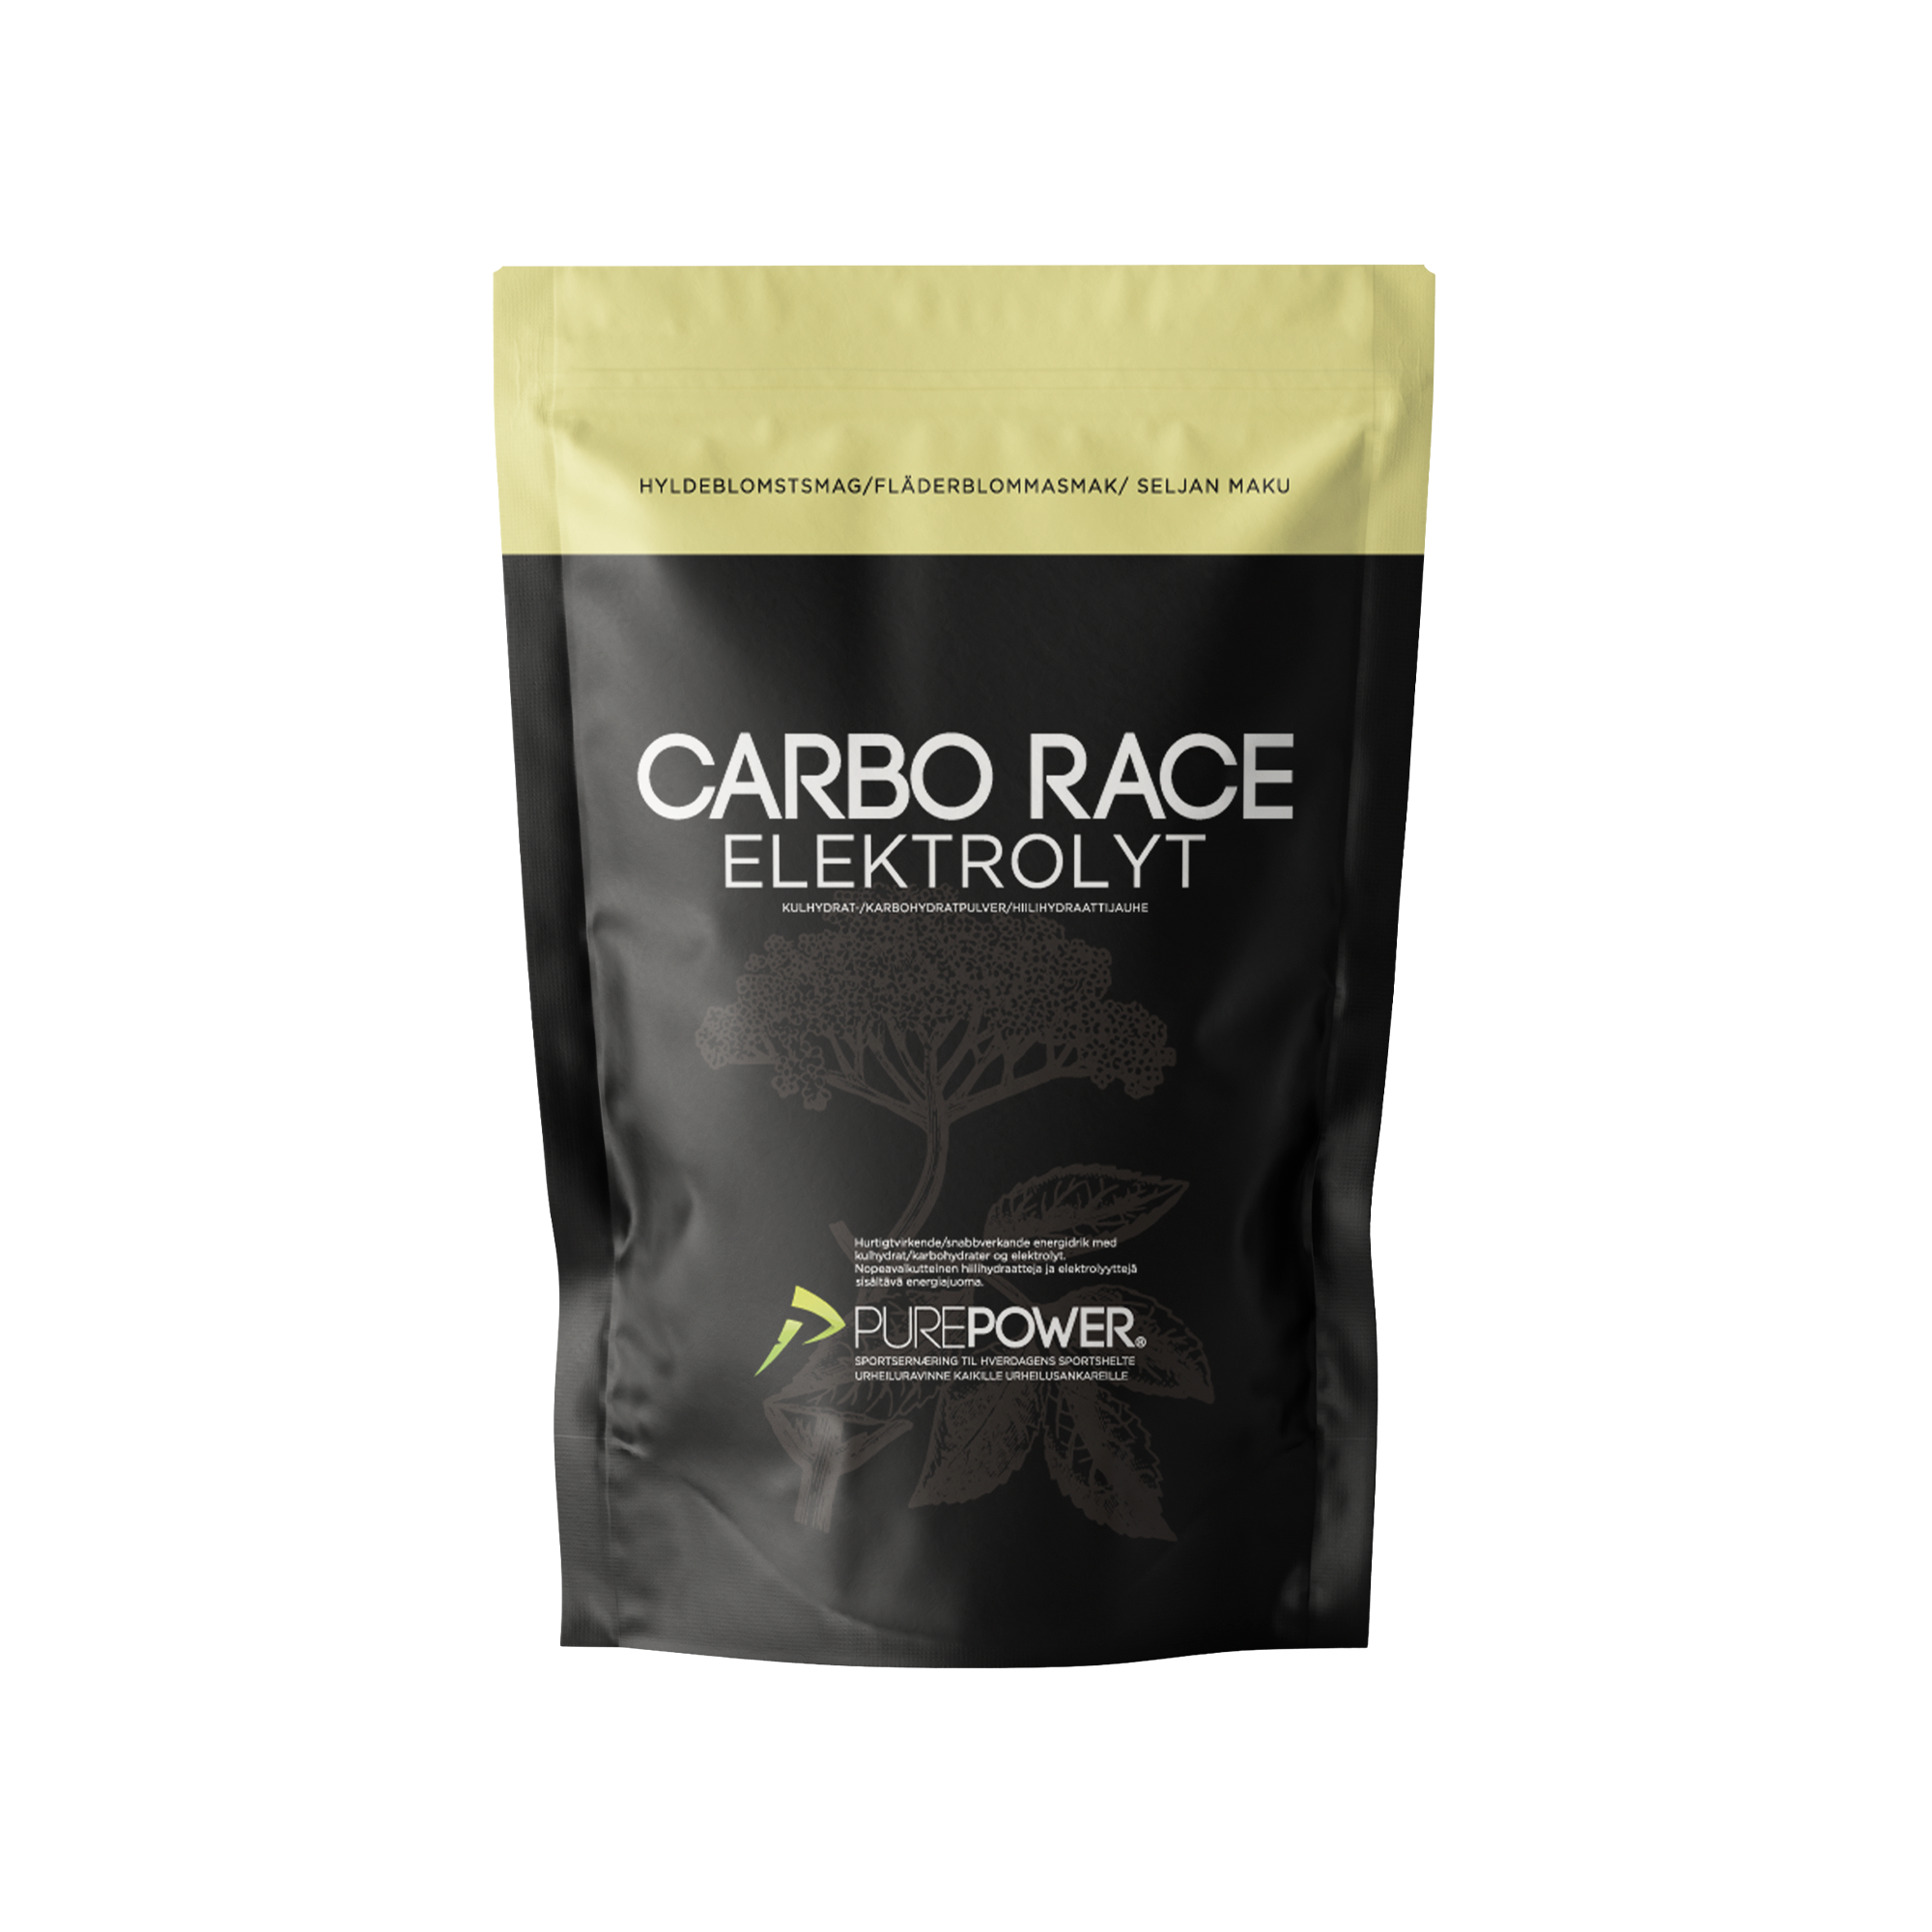 14: PurePower Carbo Race - Elektrolyt energidrik - Hyldeblomst - 1,0 kg